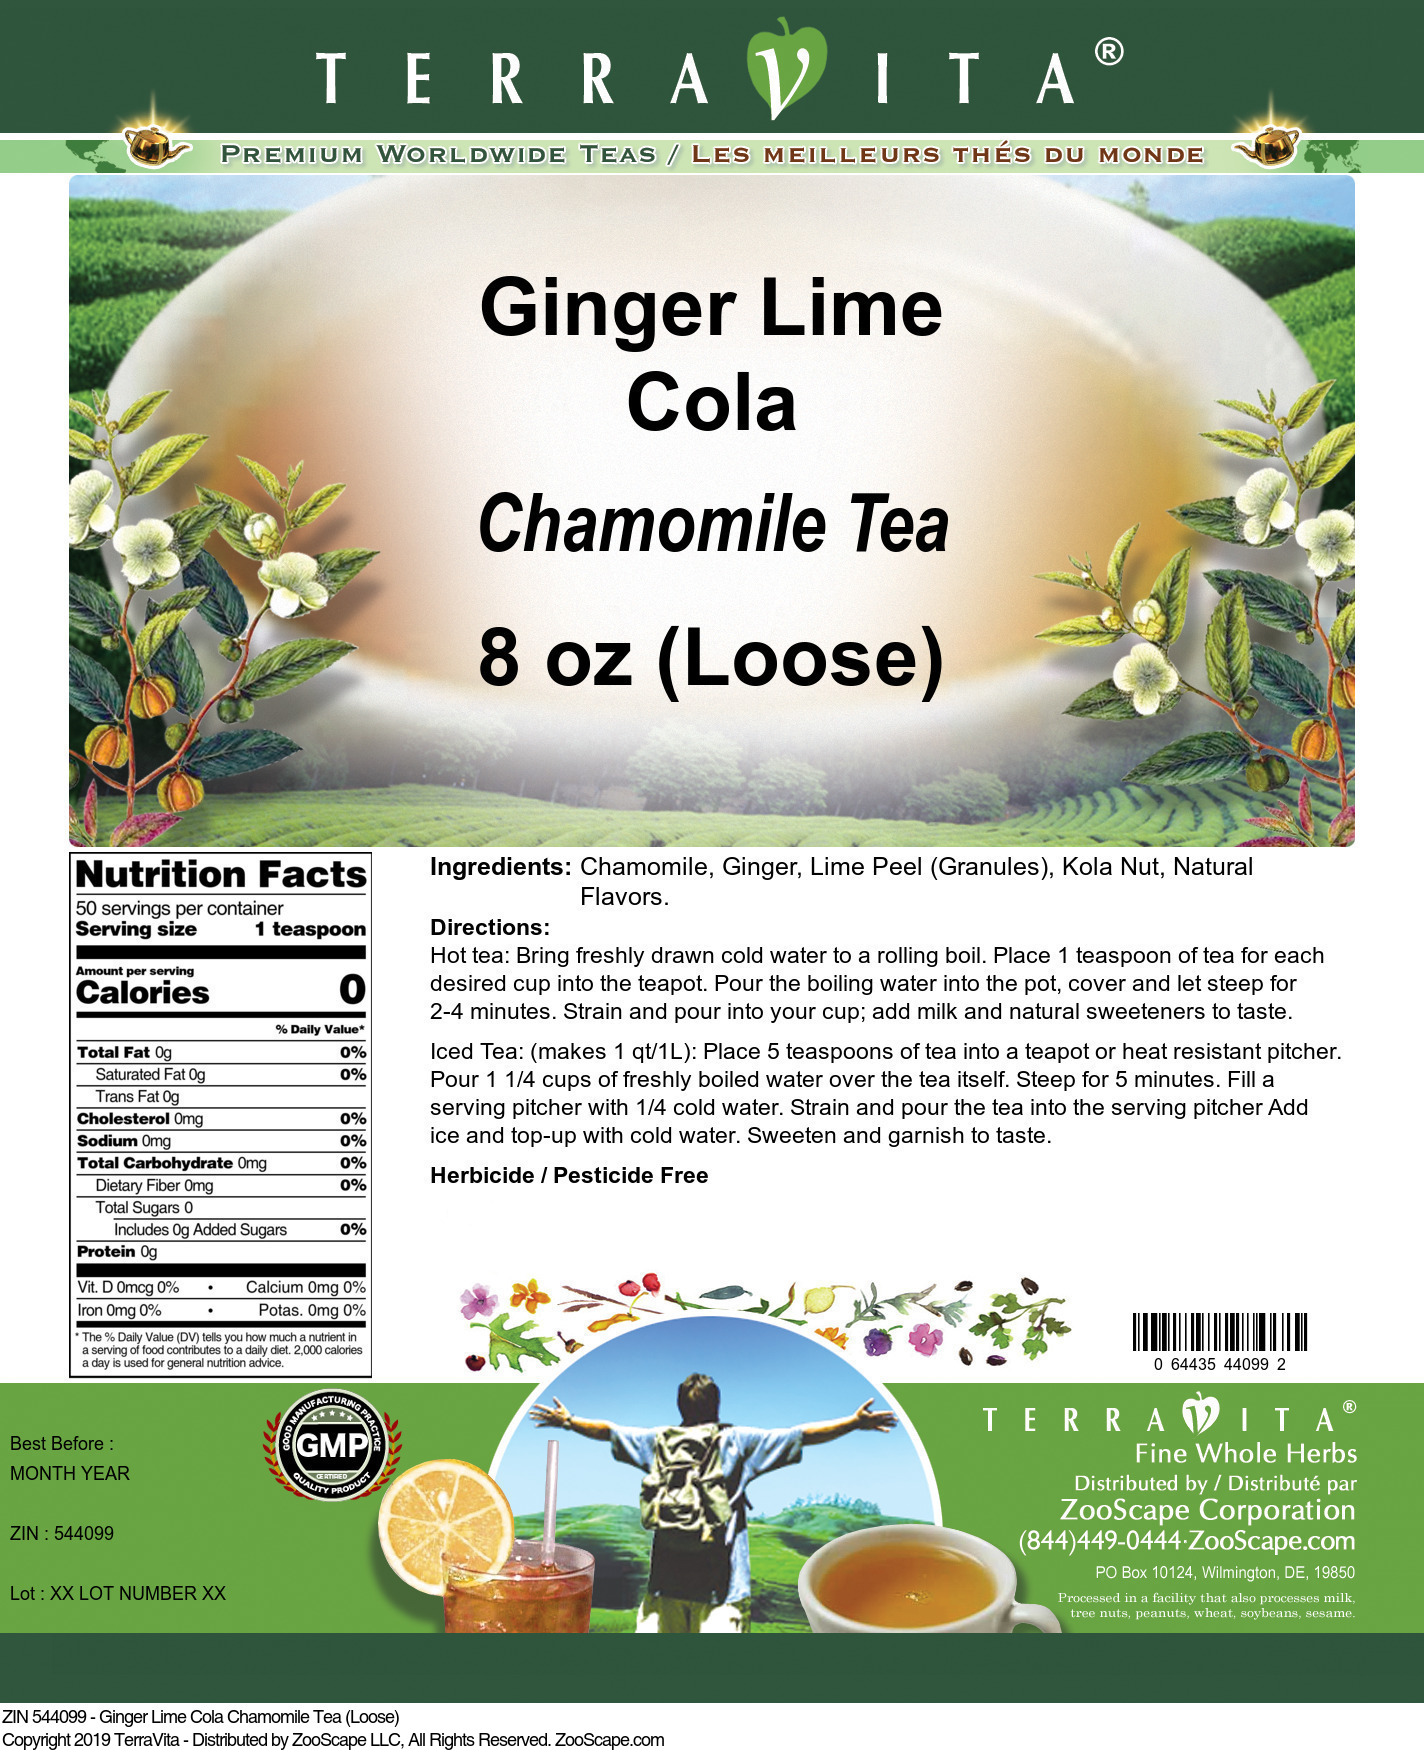 Ginger Lime Cola Chamomile Tea (Loose) - Label